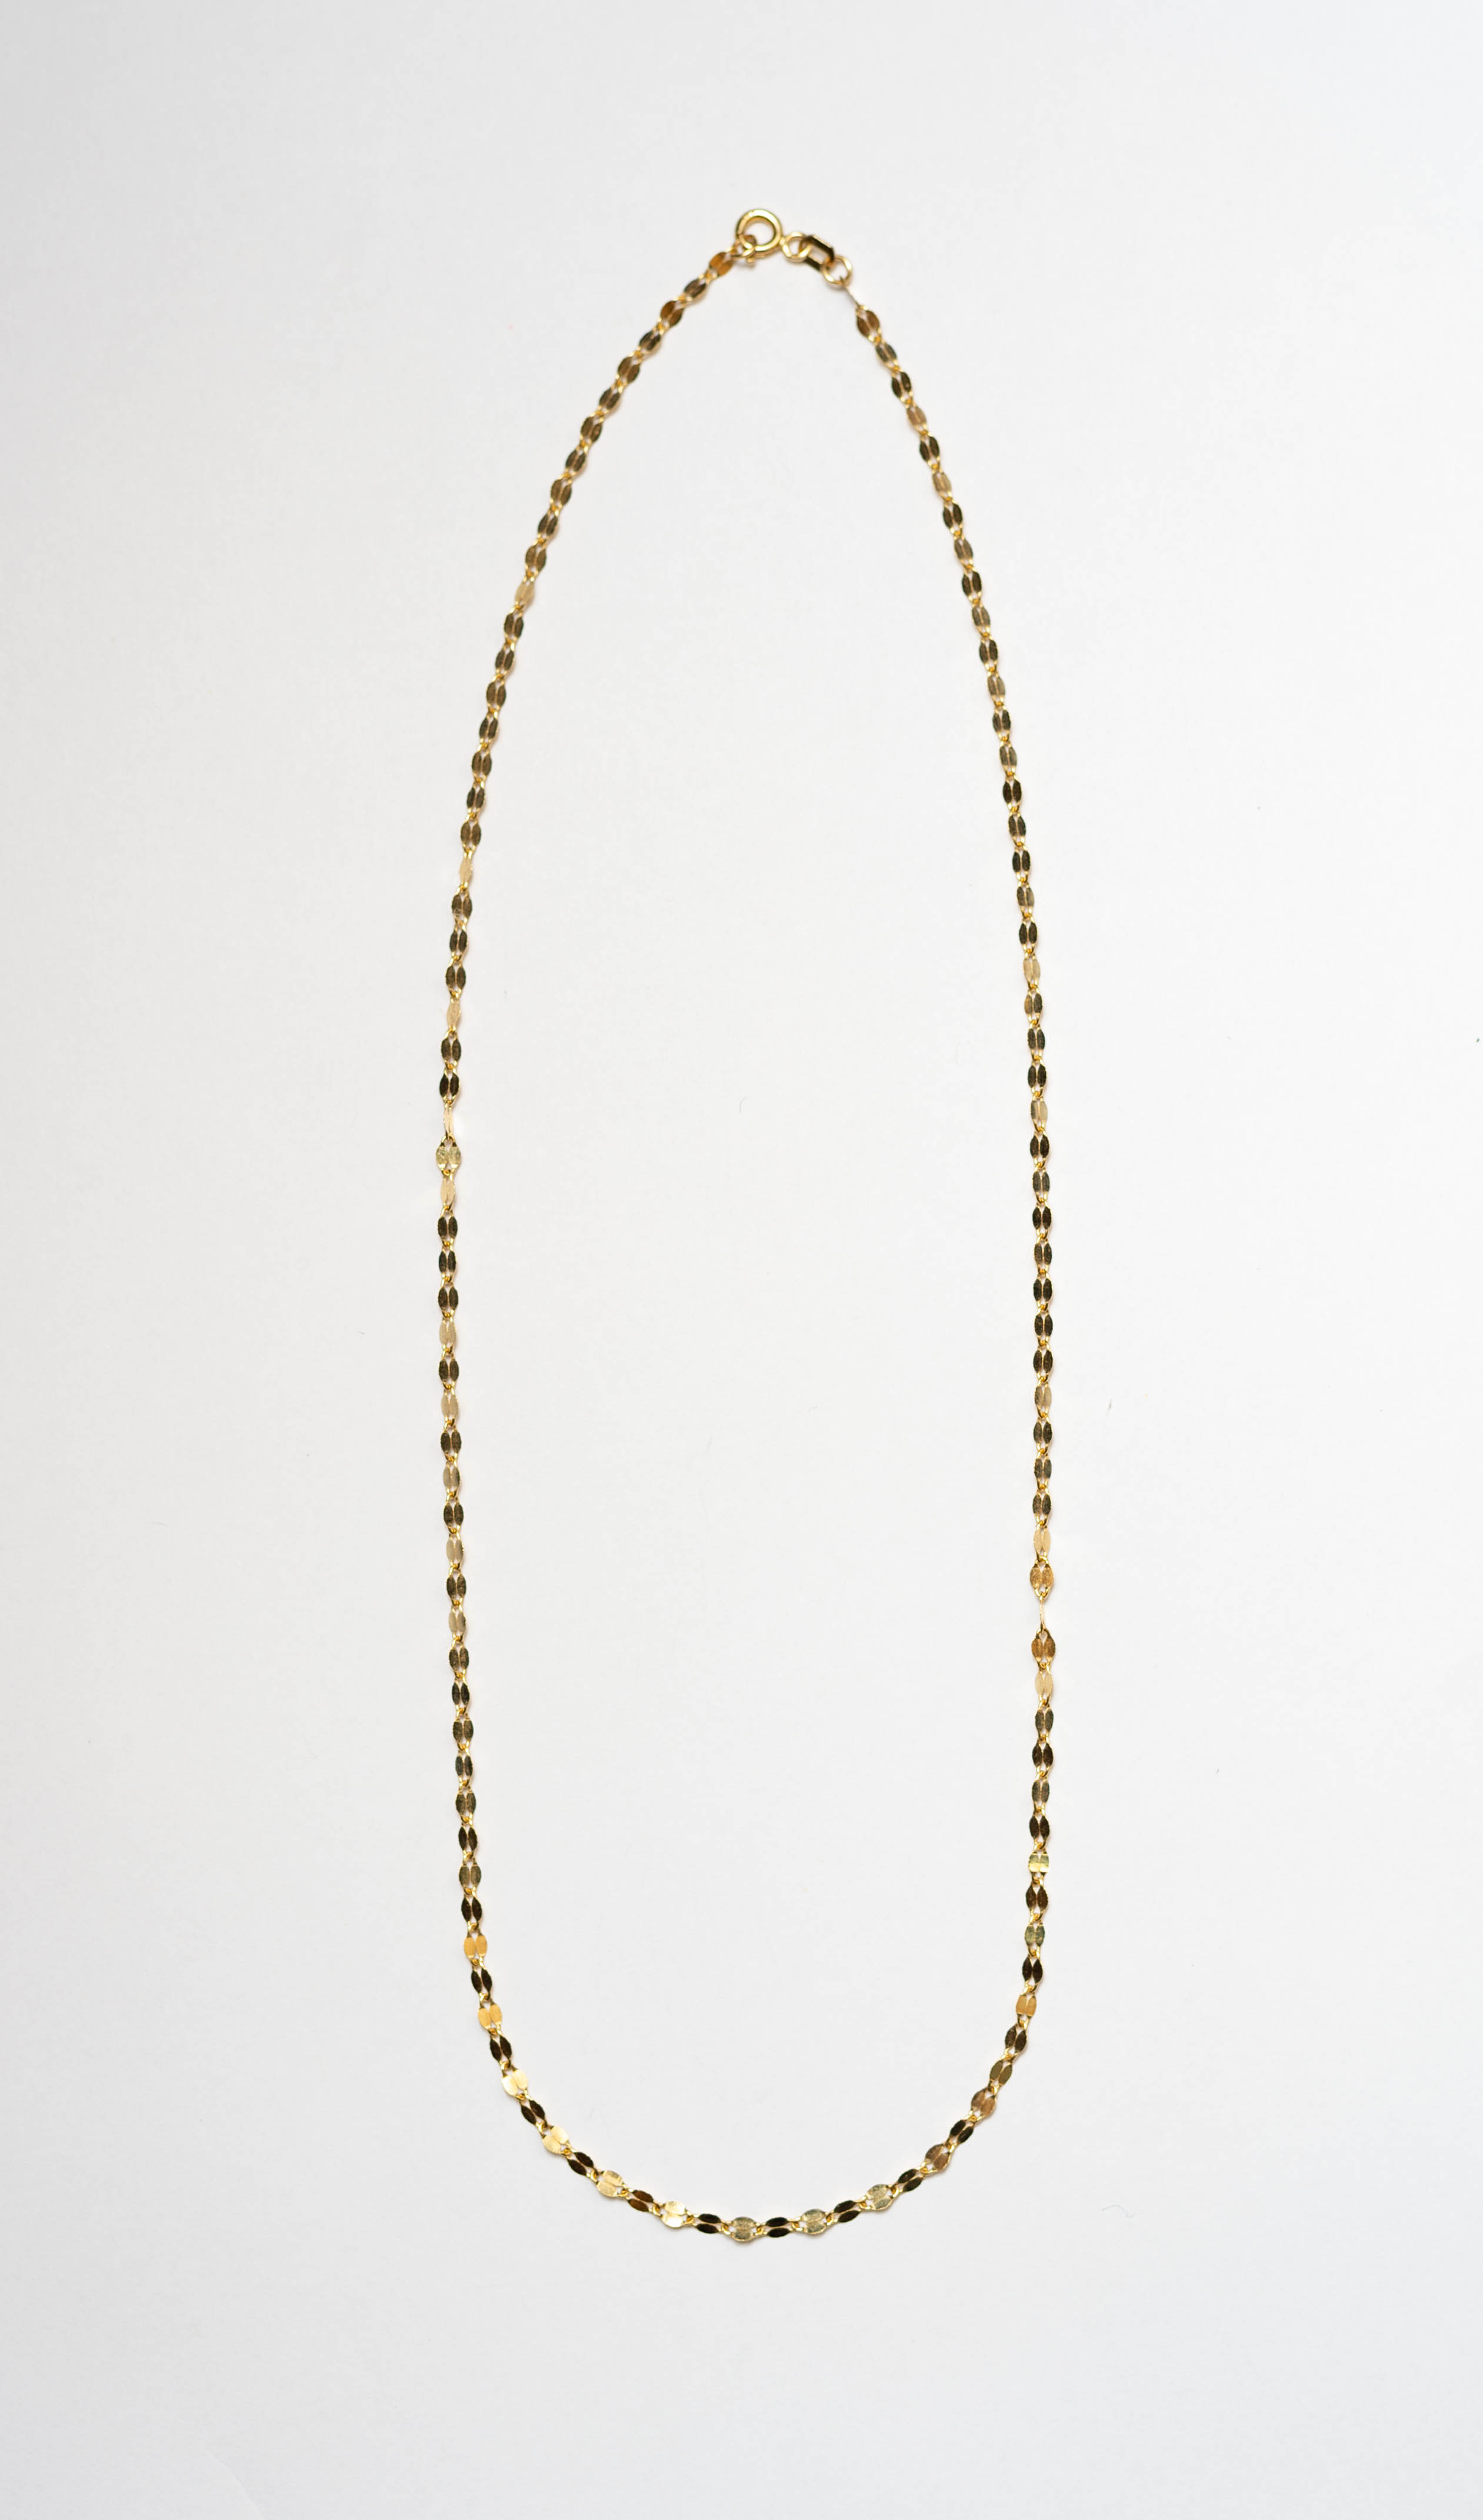 14K Turkish Gold Necklace, quality 14K necklace